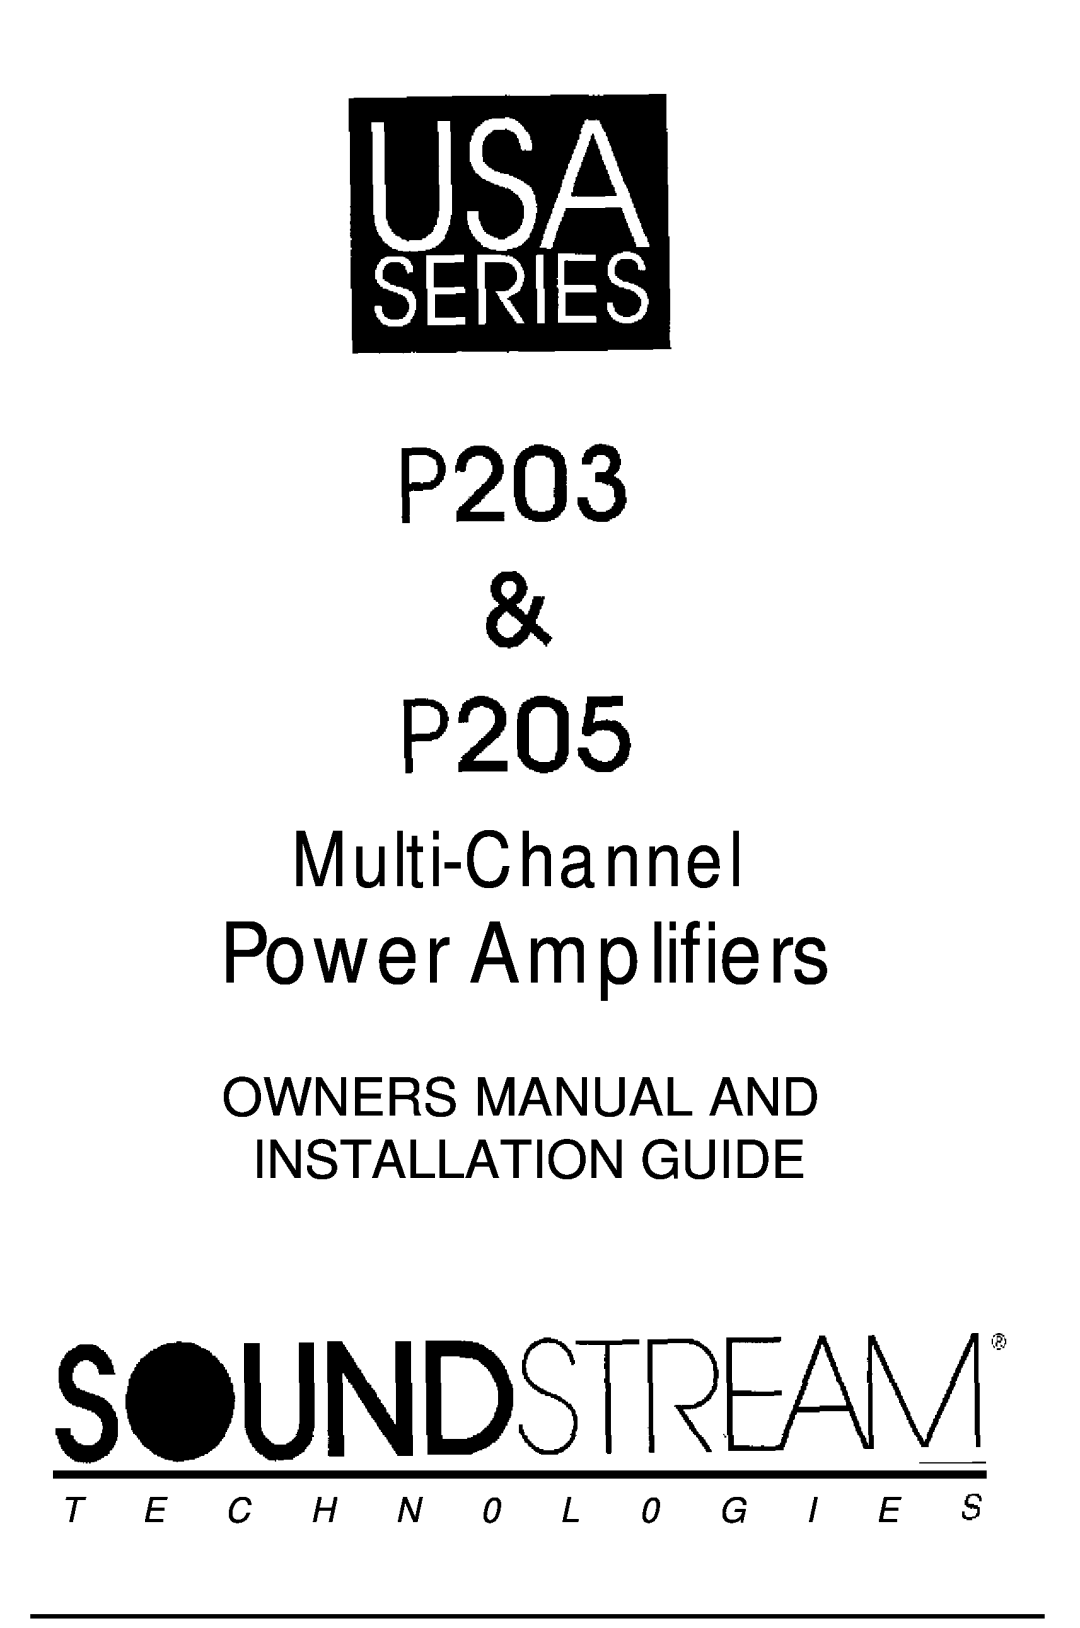 Soundstream Technologies owner manual P203 & P205, Power Amplifiers, Multi-Channel, T E C H N 0 L 0 G I E S 